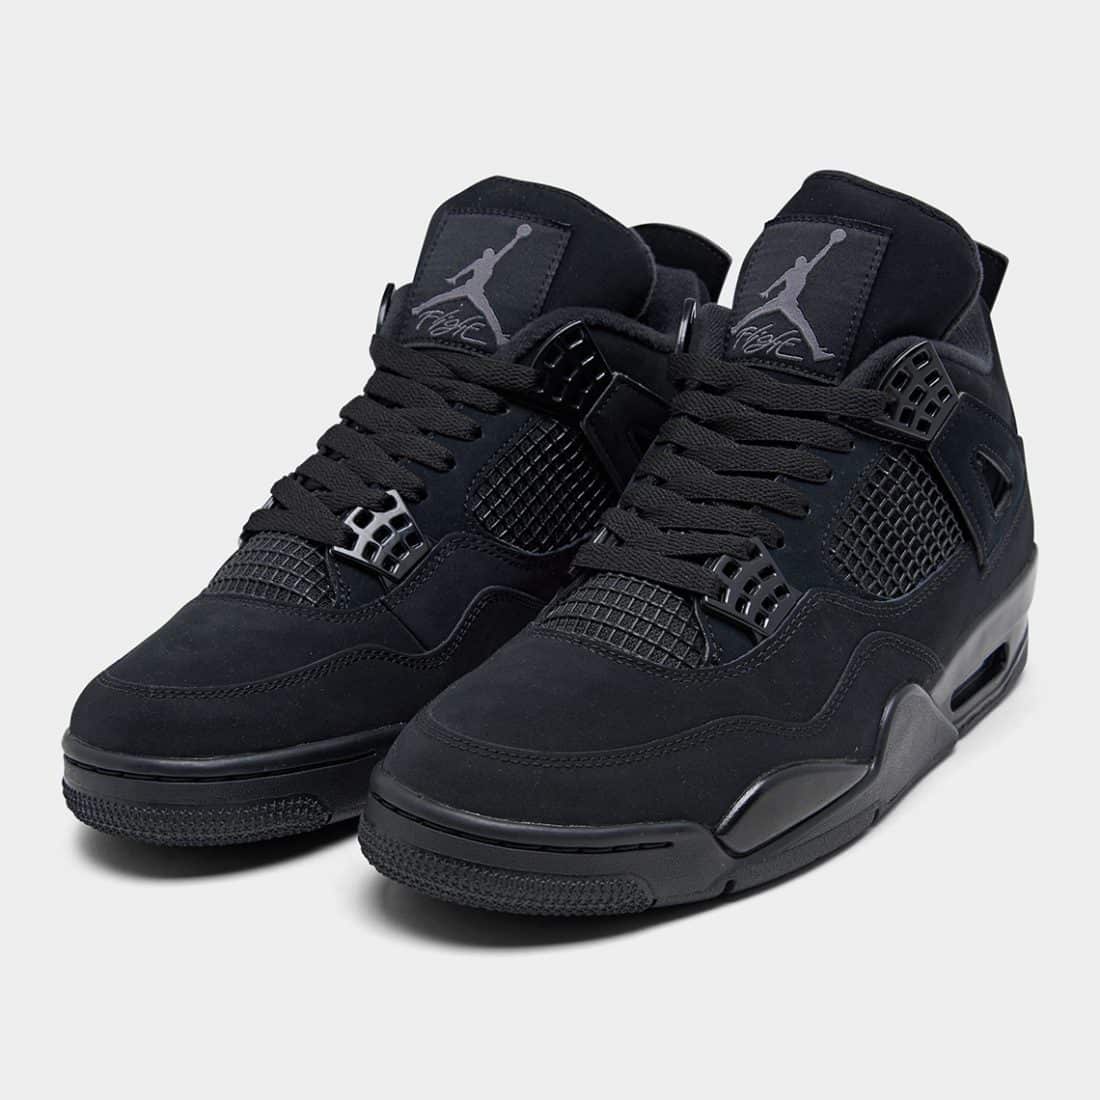 Air Jordan 4 Black Cat - Le Site de la Sneaker